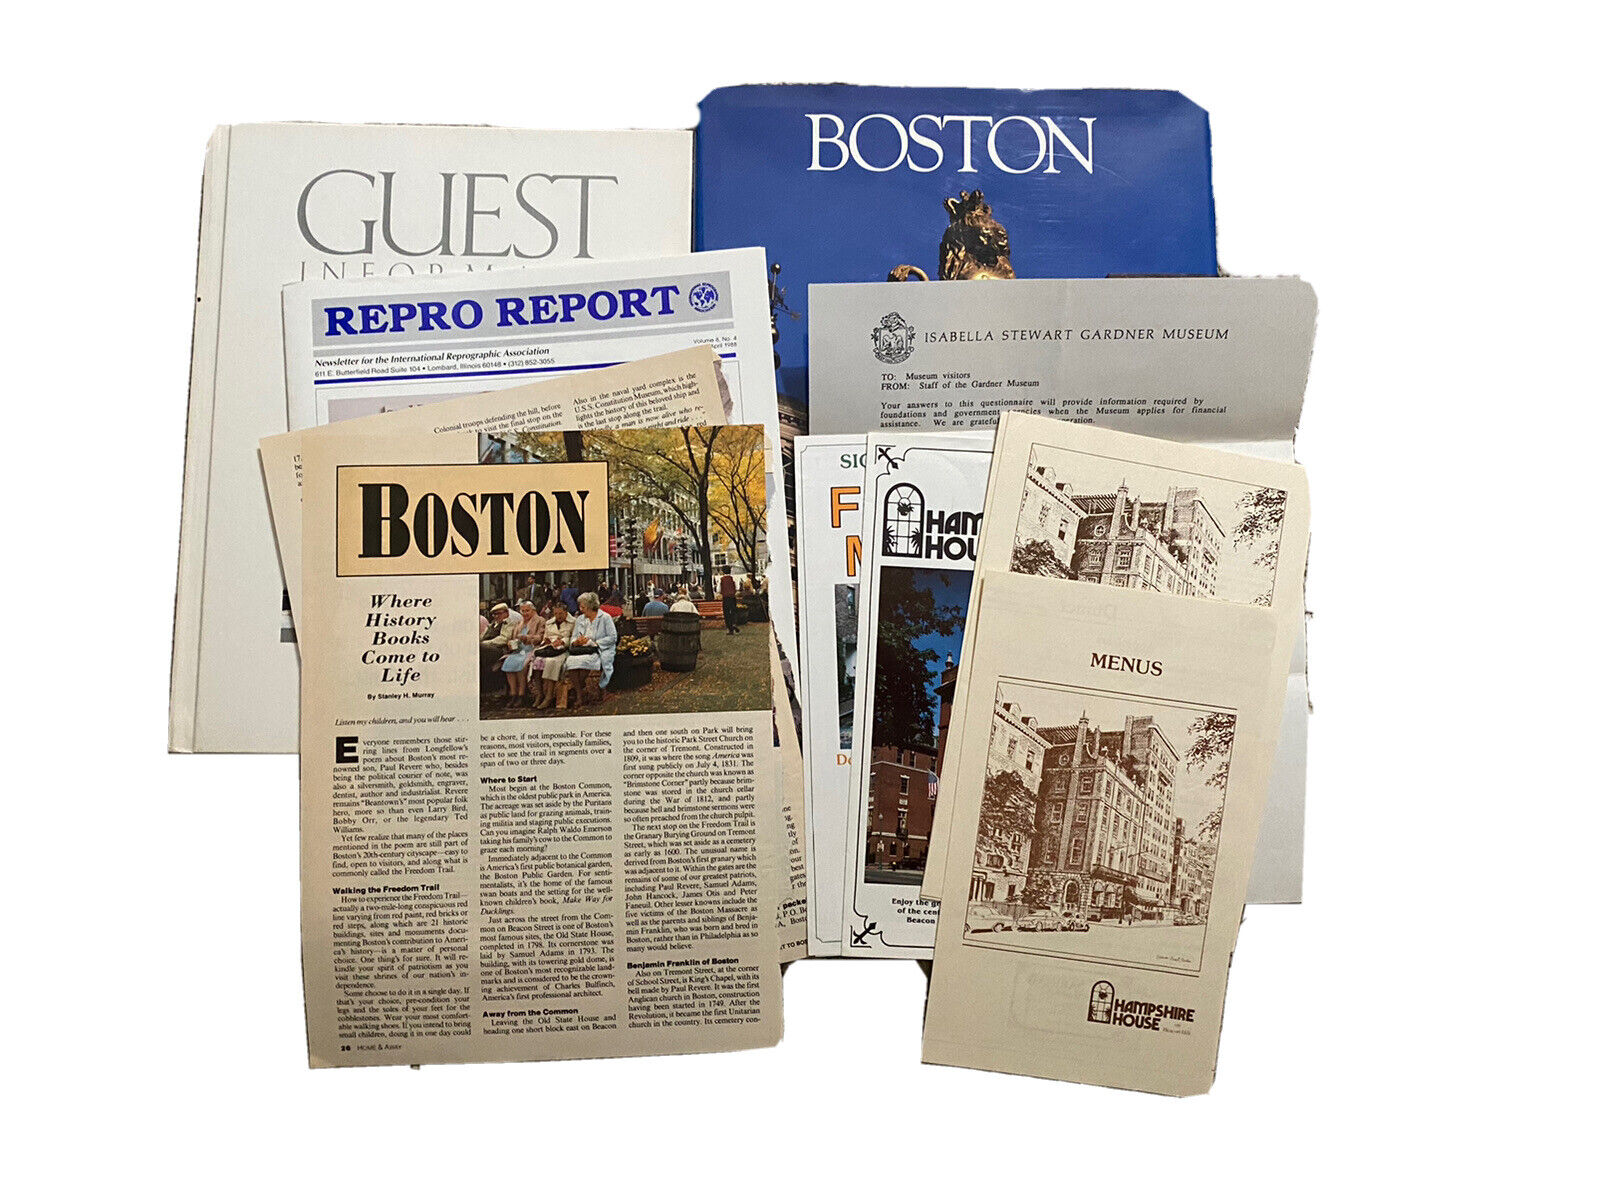 VTG 80s 90s Boston Tourism Brochures/Catalogues/Books/Map Hampshire House Photos